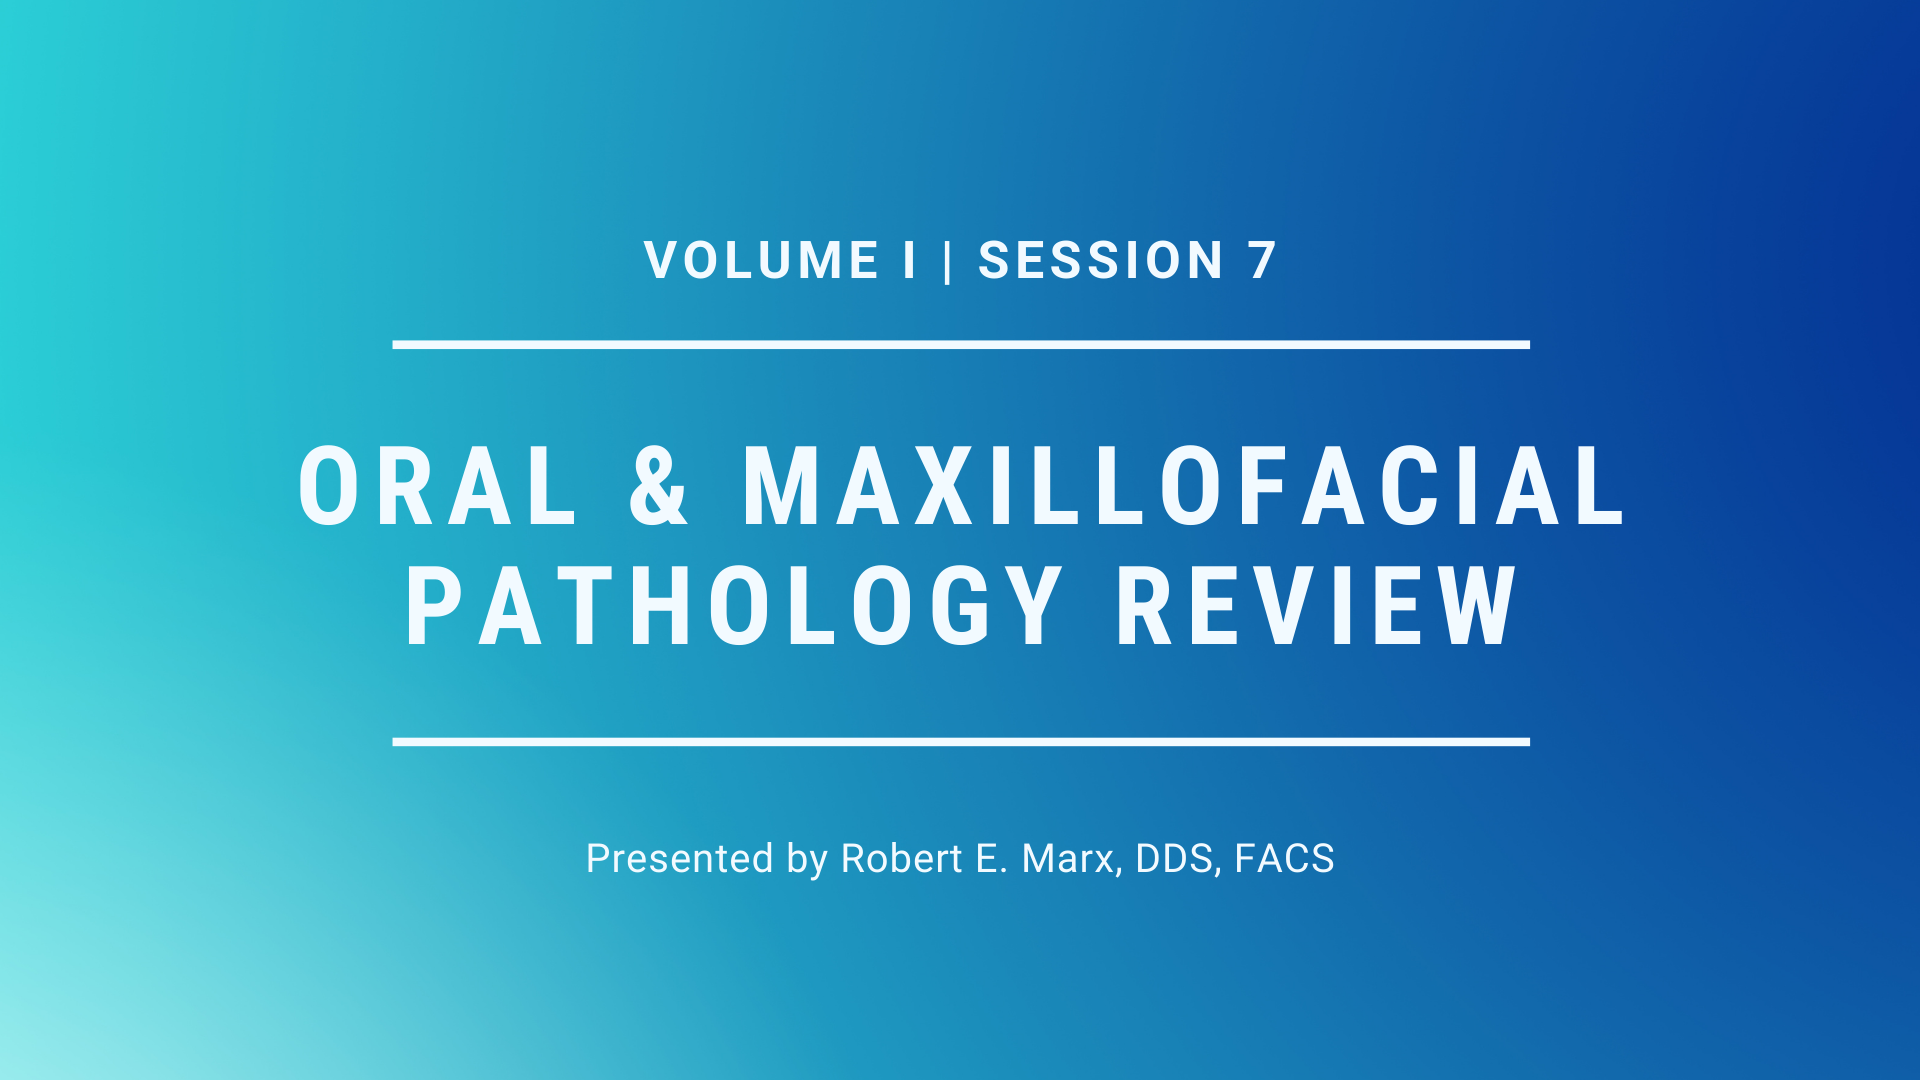 Oral & Maxillofacial Pathology Review – Volume I (OMFS) - Session 7